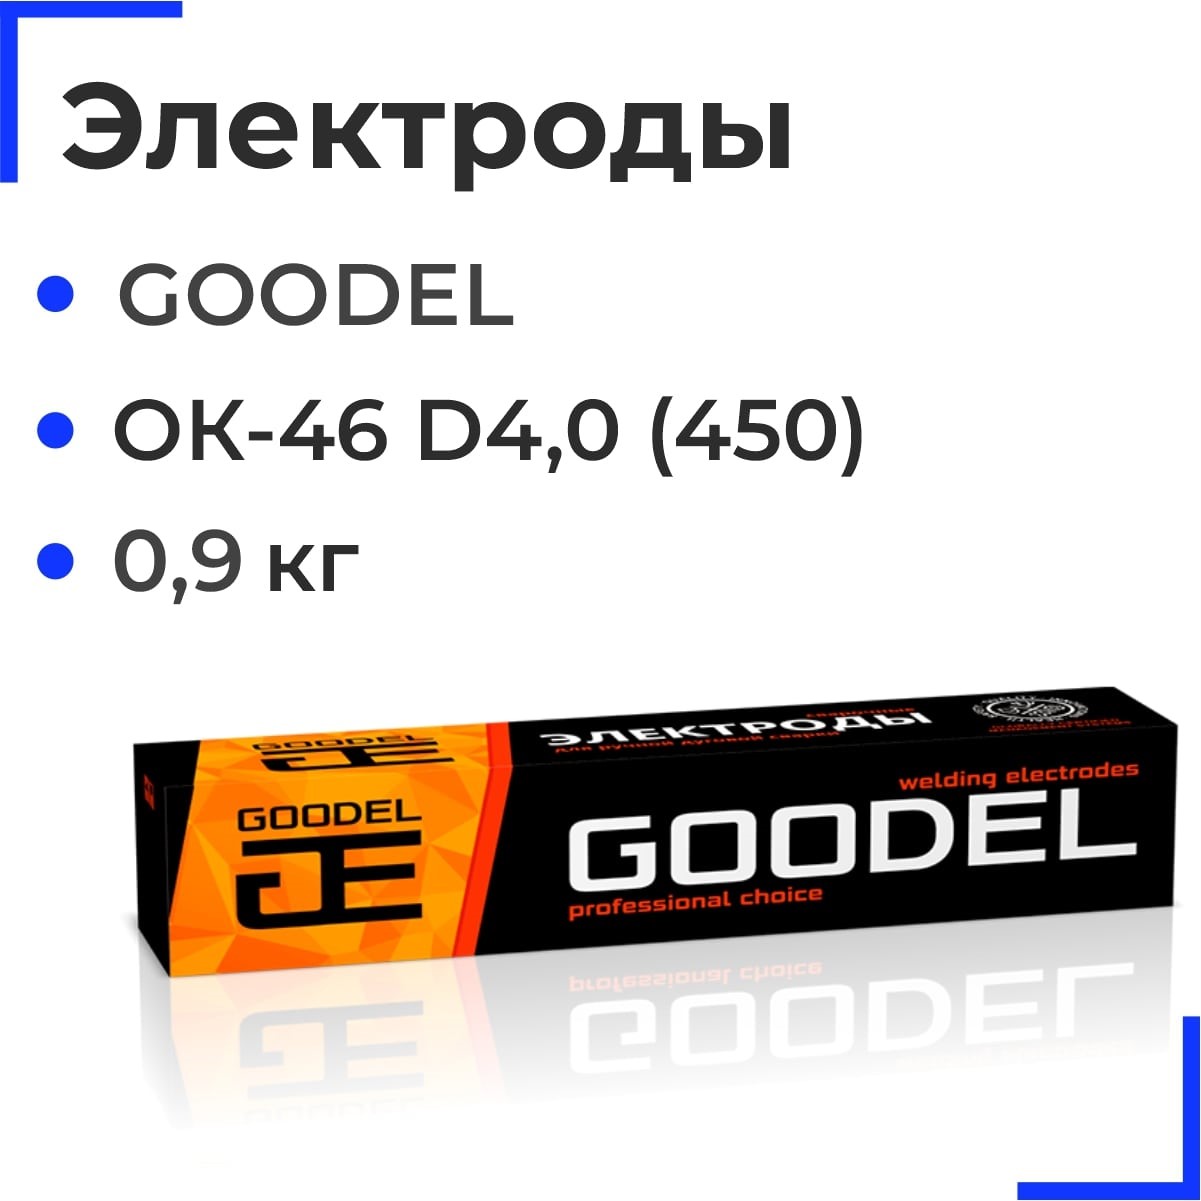 ОК-46 D4,0 Электроды GOODEL (0.9кг)